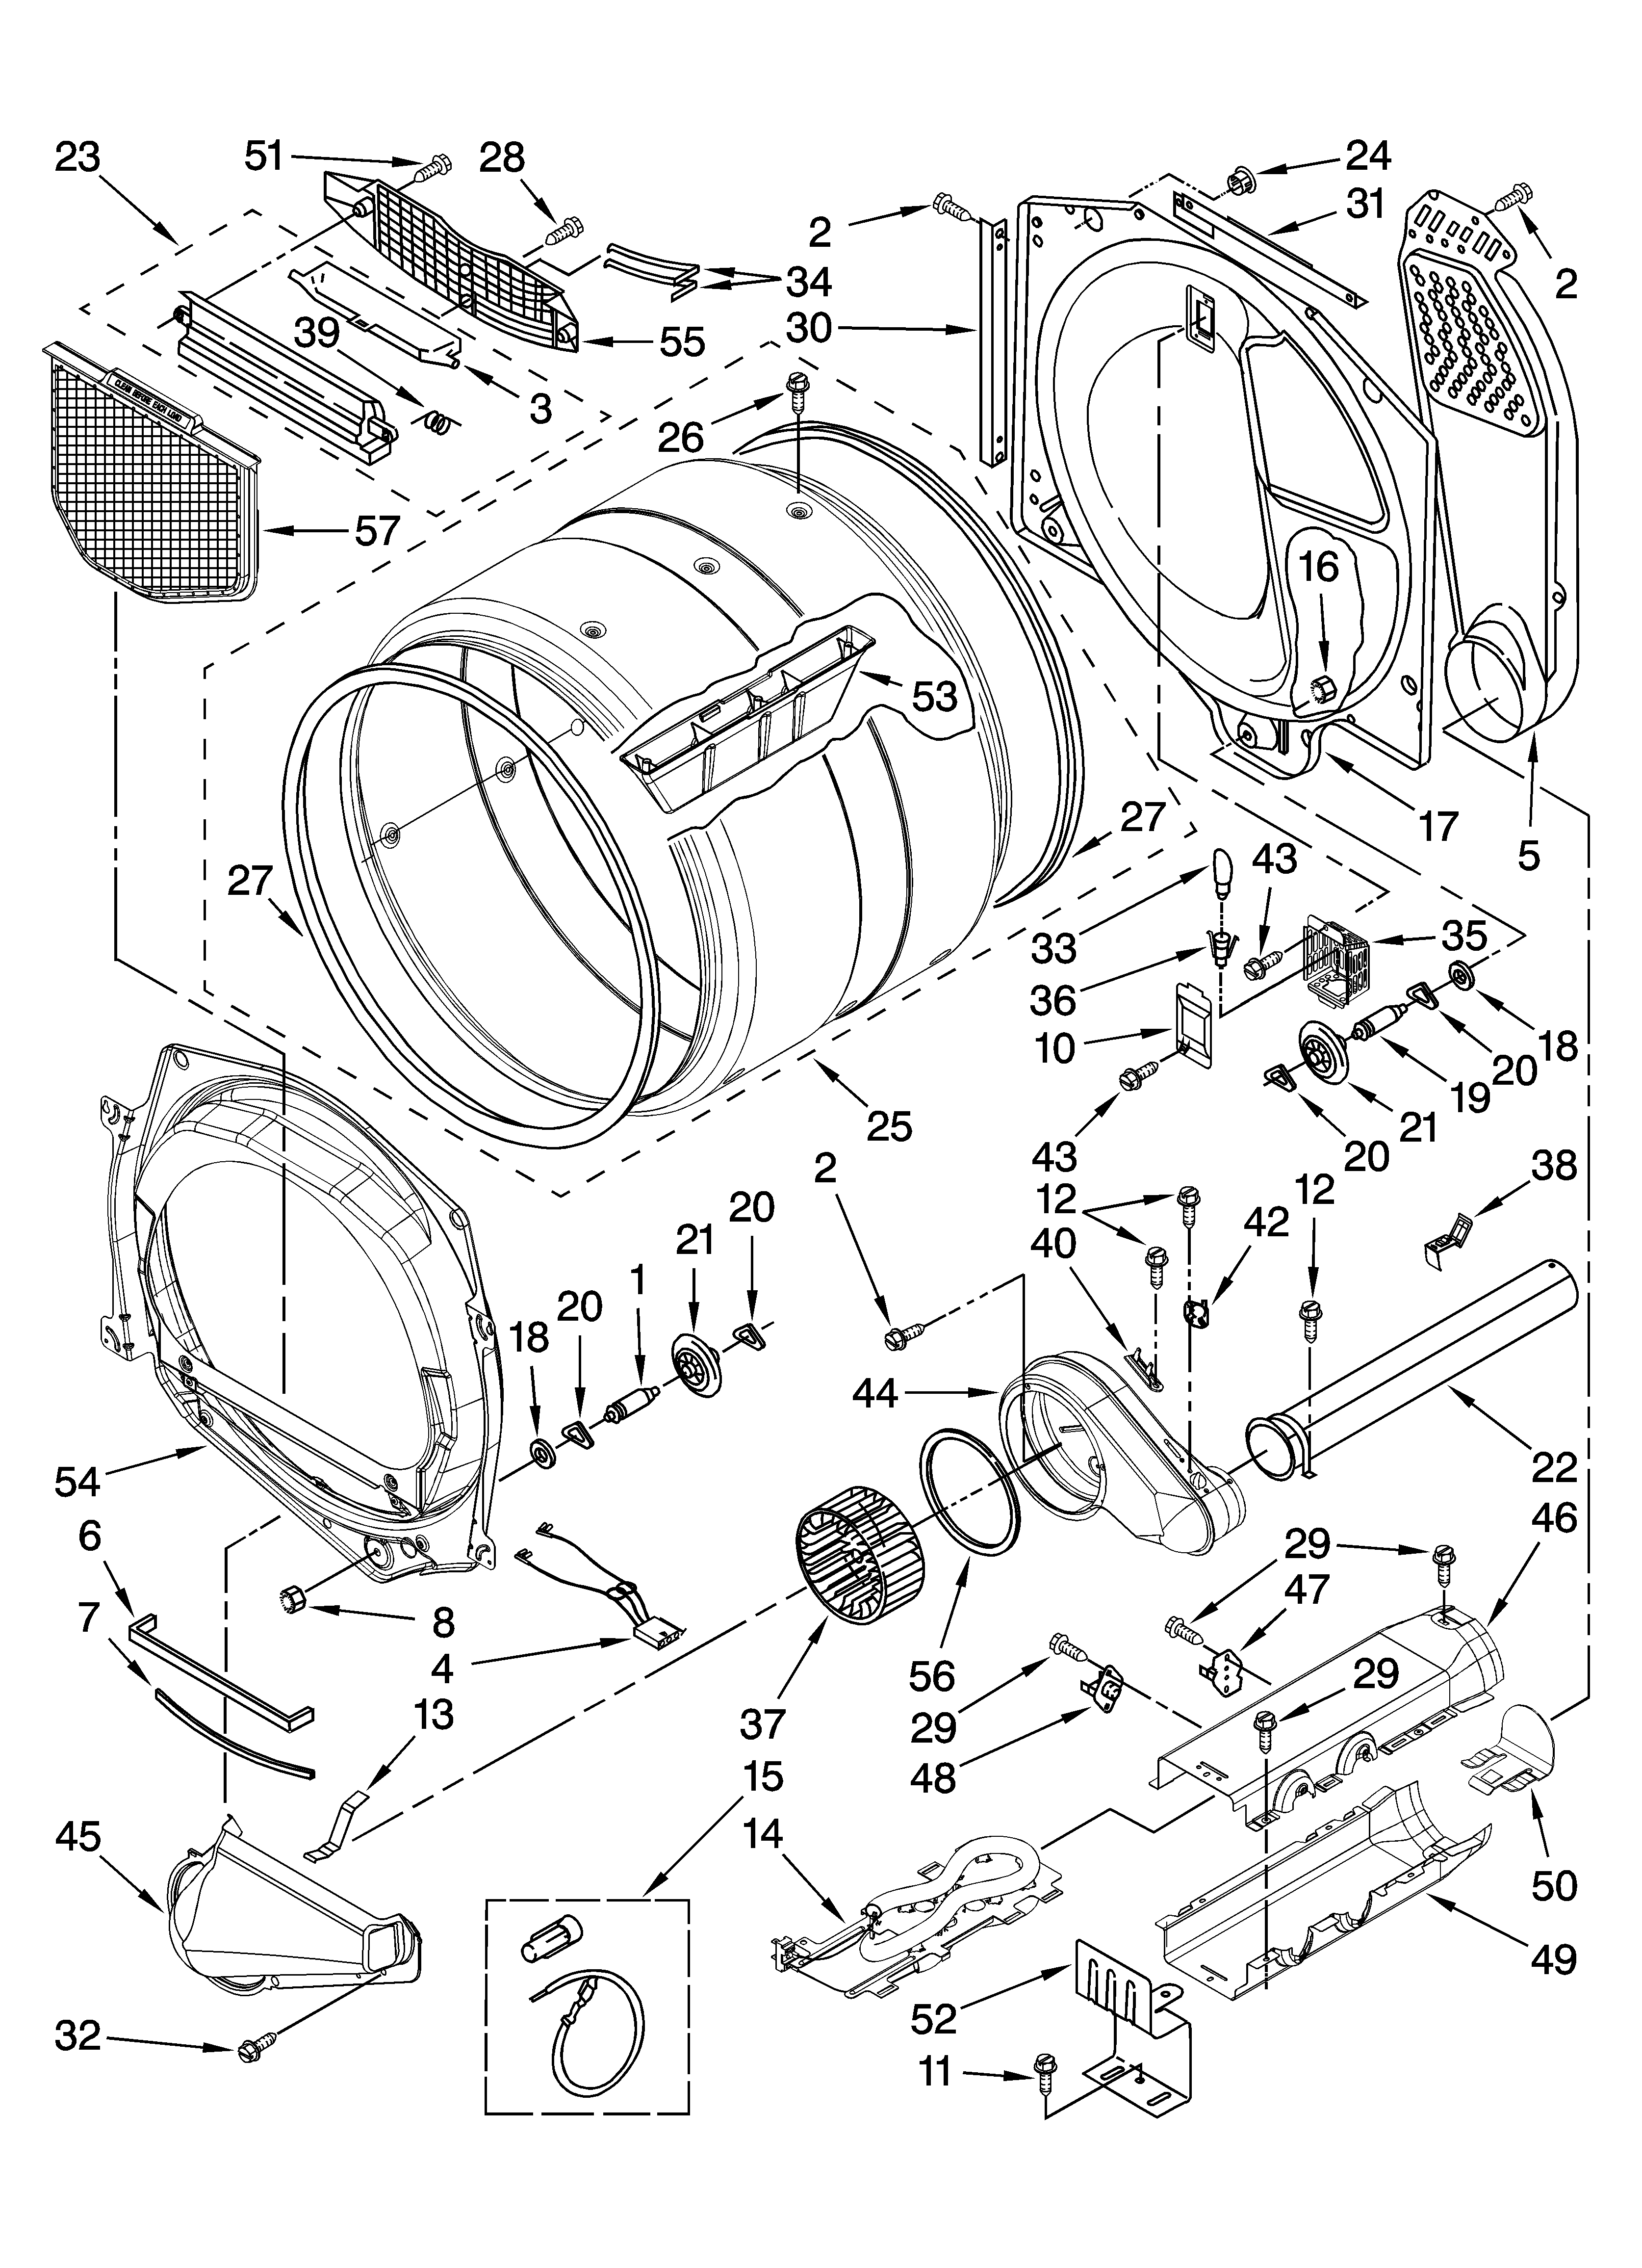 Electric Dryer Kenmore Dryer Wiring Diagram